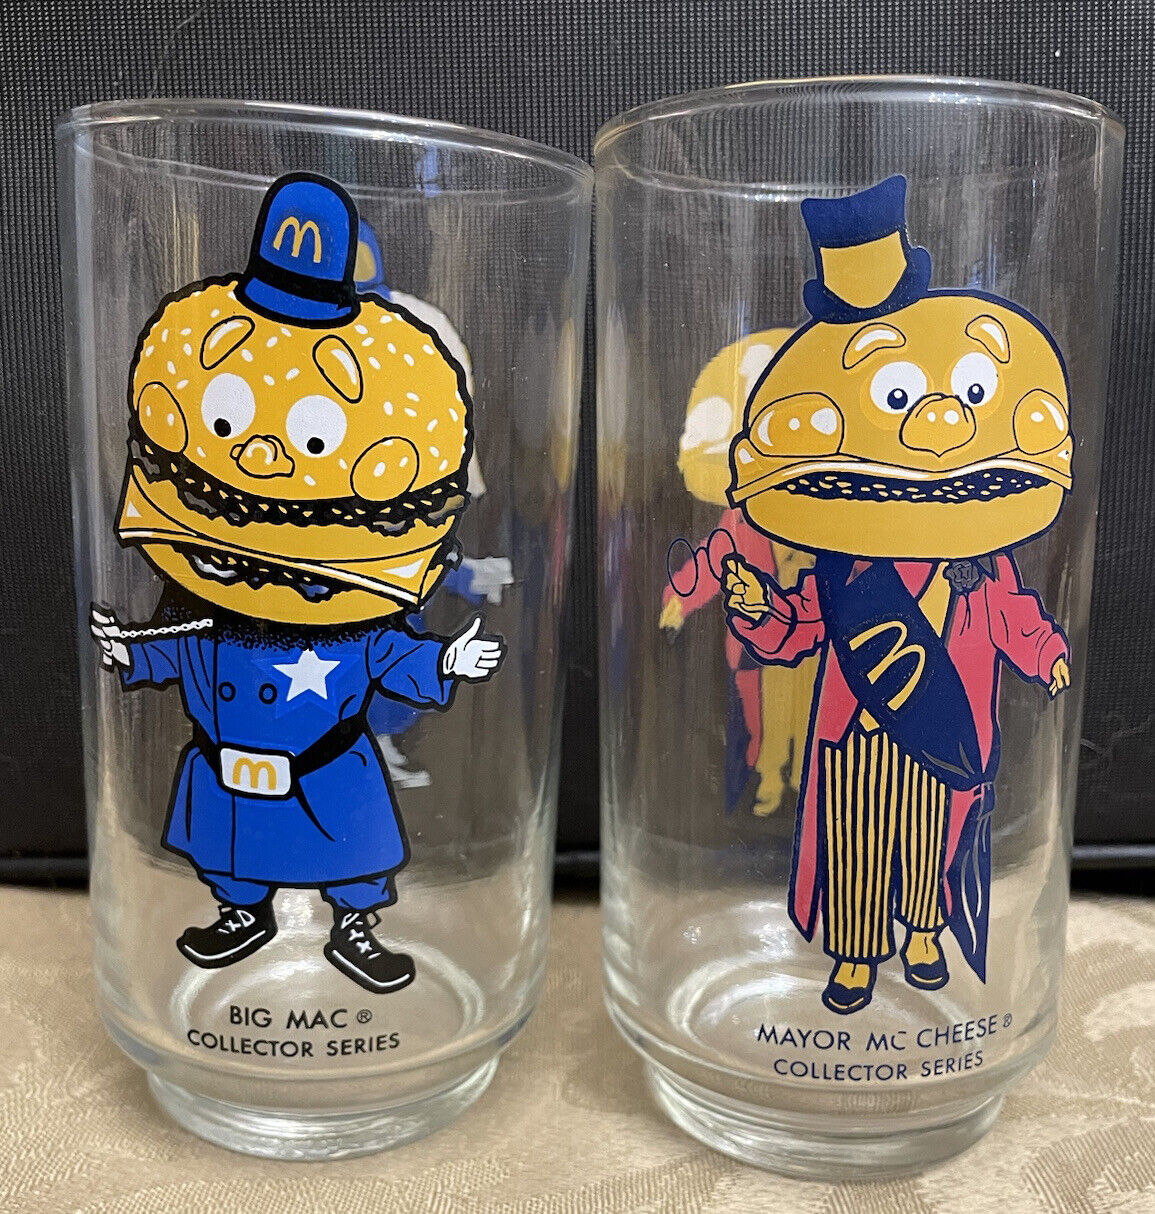 Set of 2 VTG McDonalds Collector Glasses Mayor McCheese & Big Mac 1970s Era McDs